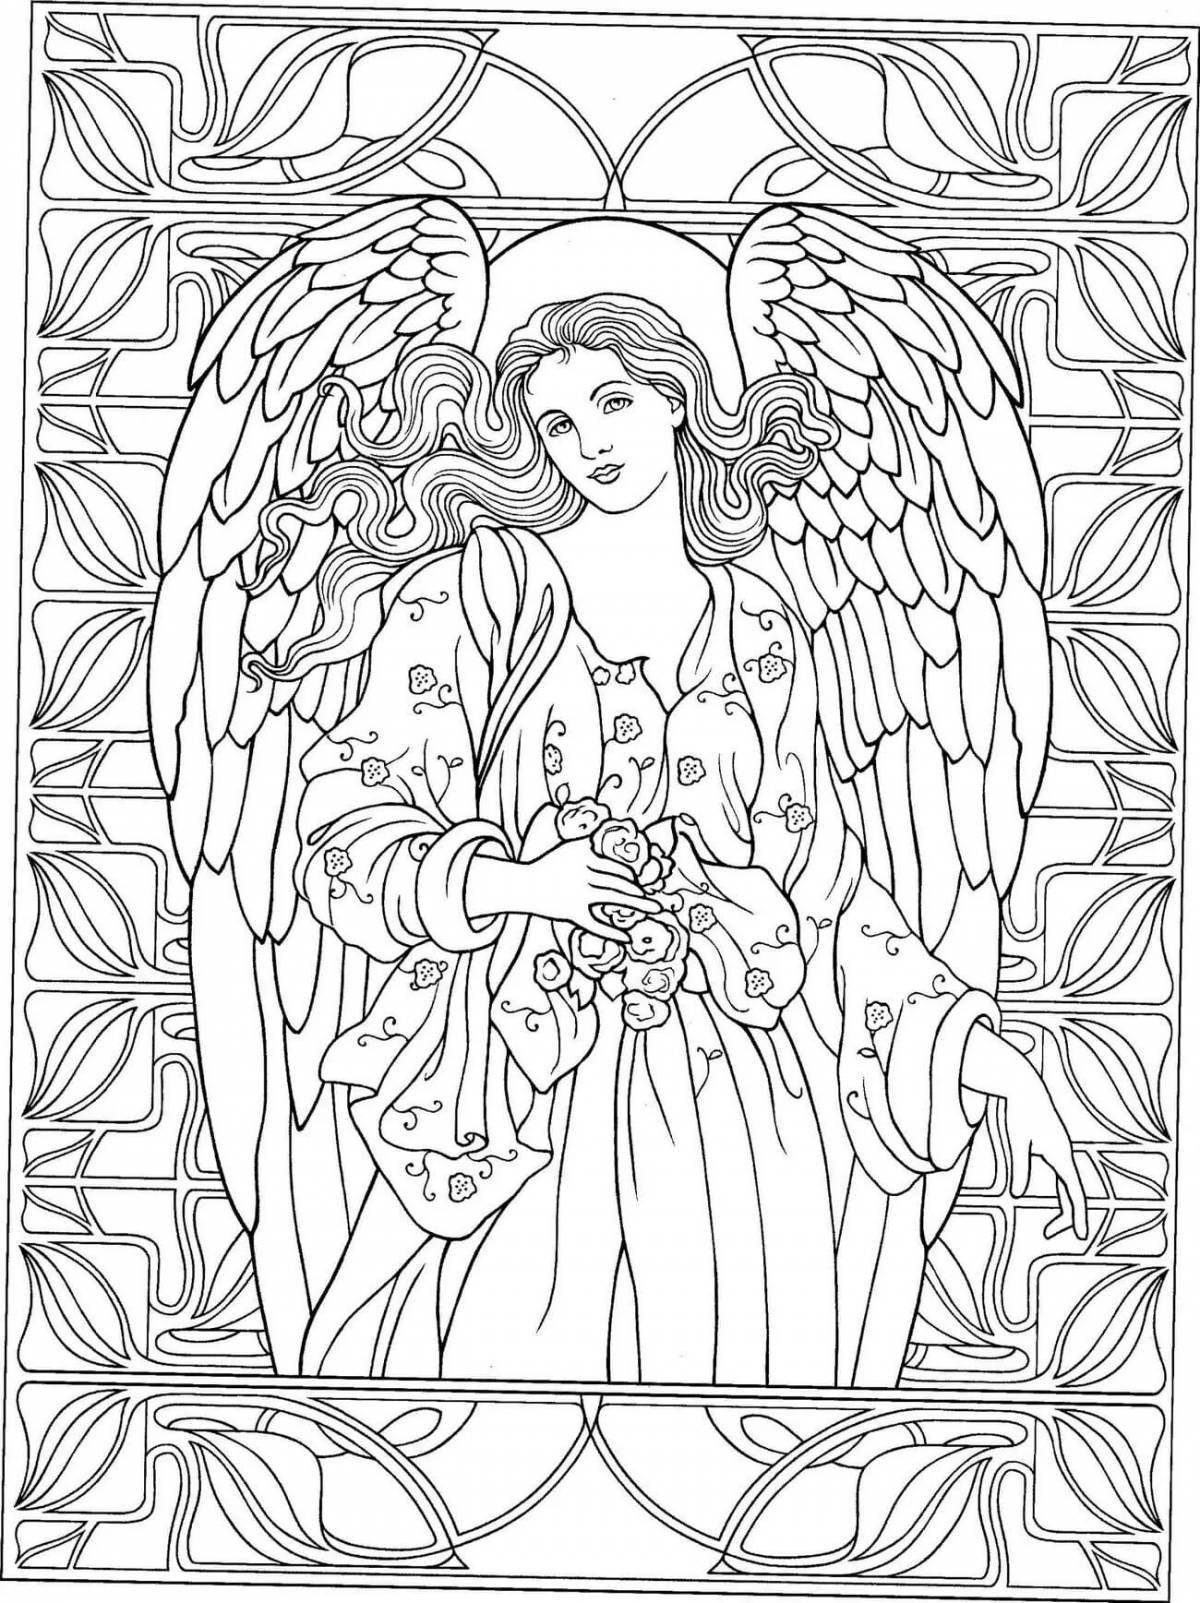 Joyful angel antistress coloring book